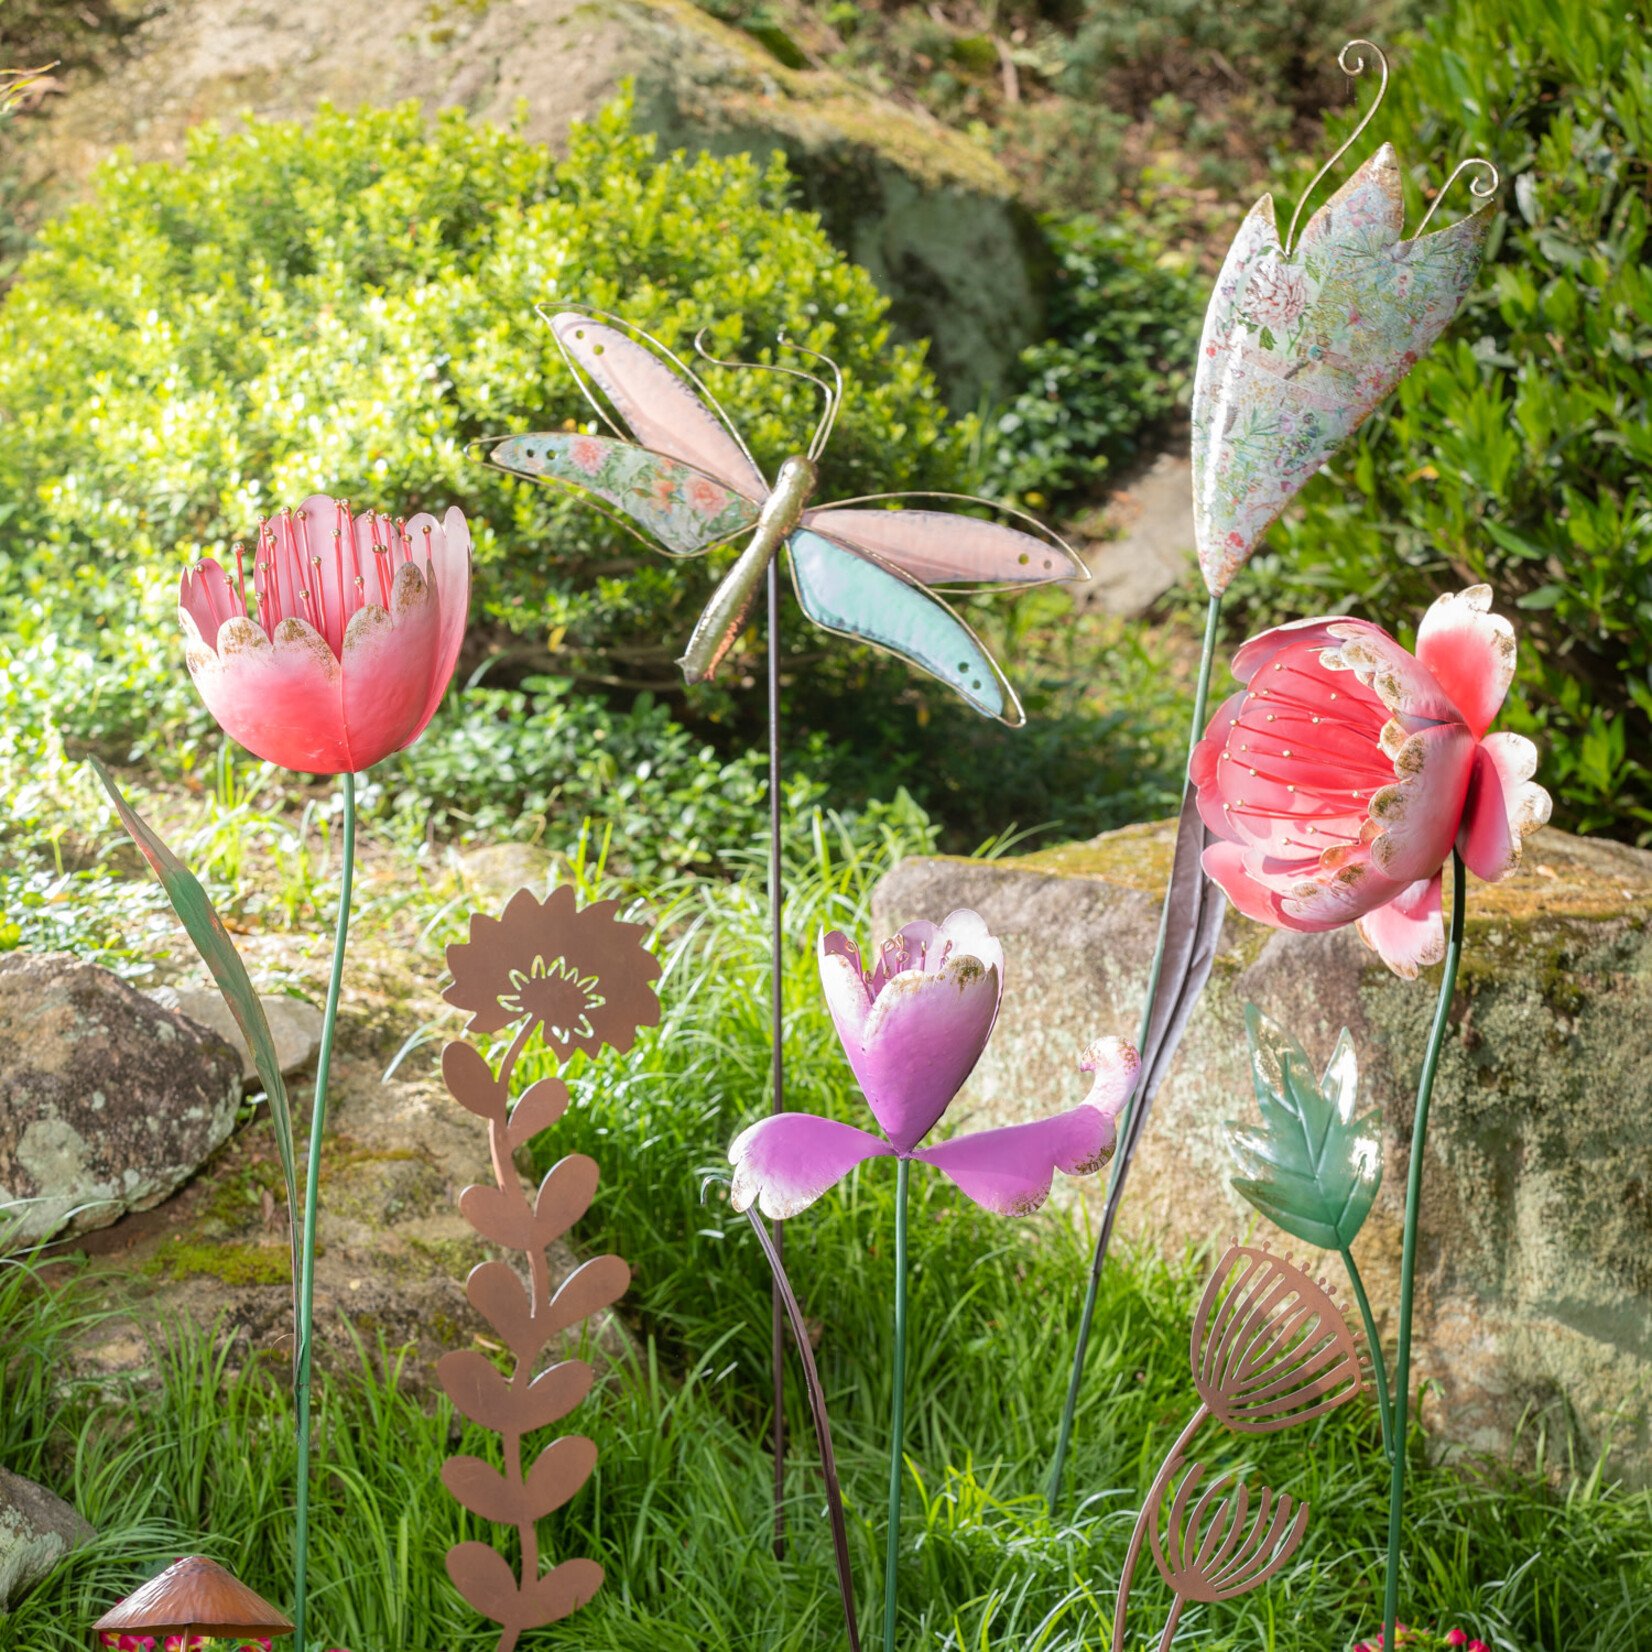 Garden Stake - 65 Inch Tall Blooming Iris